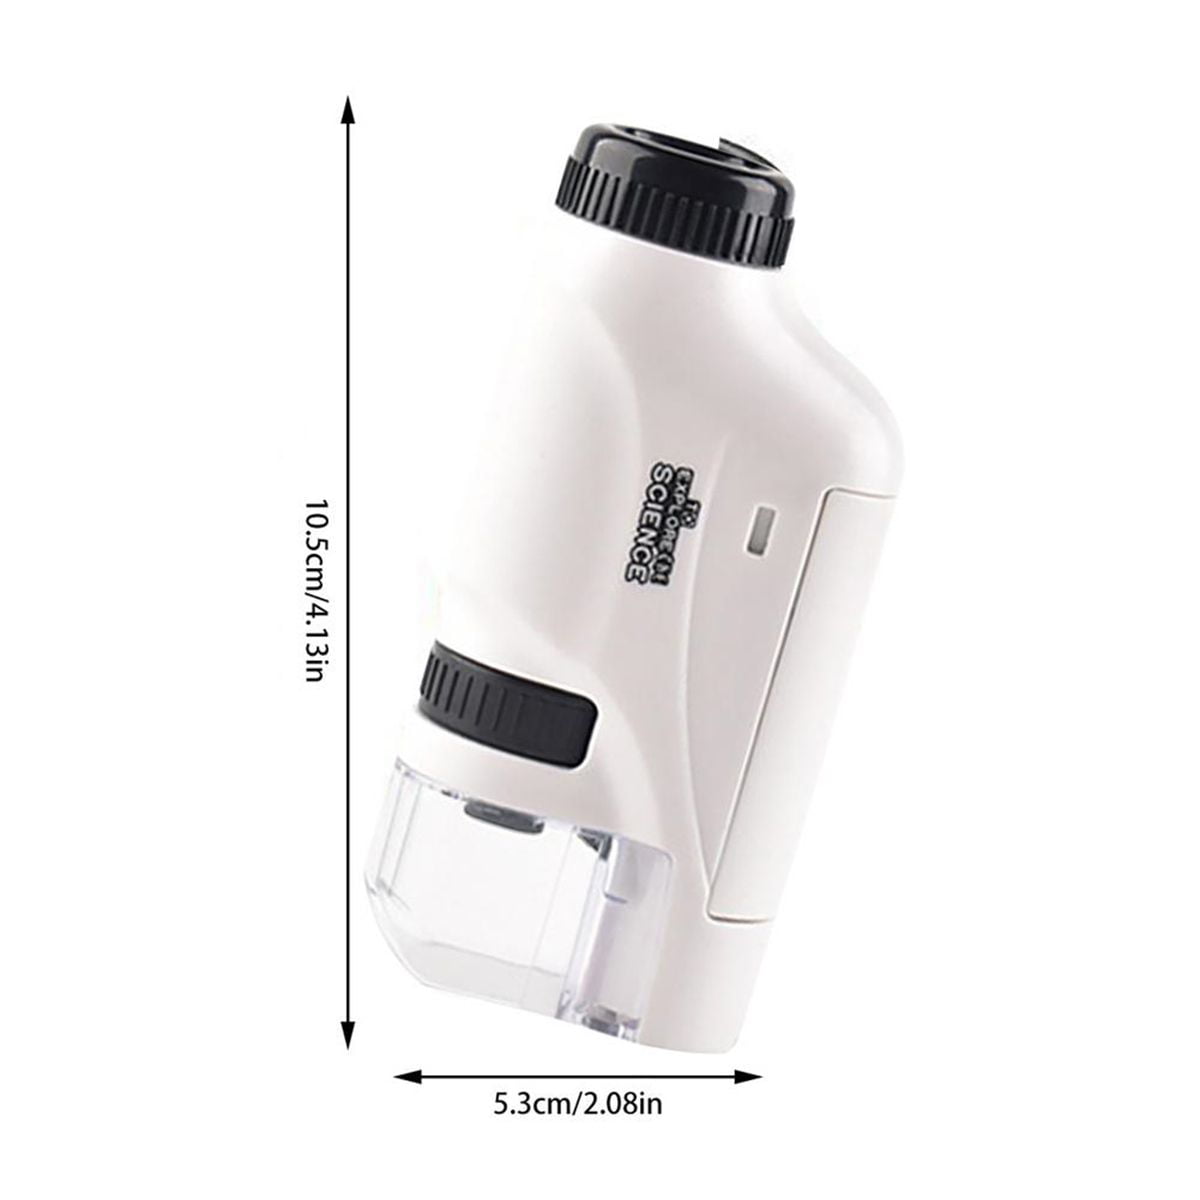 Mini kit de microscope de poche avec lumière LED, laboratoire